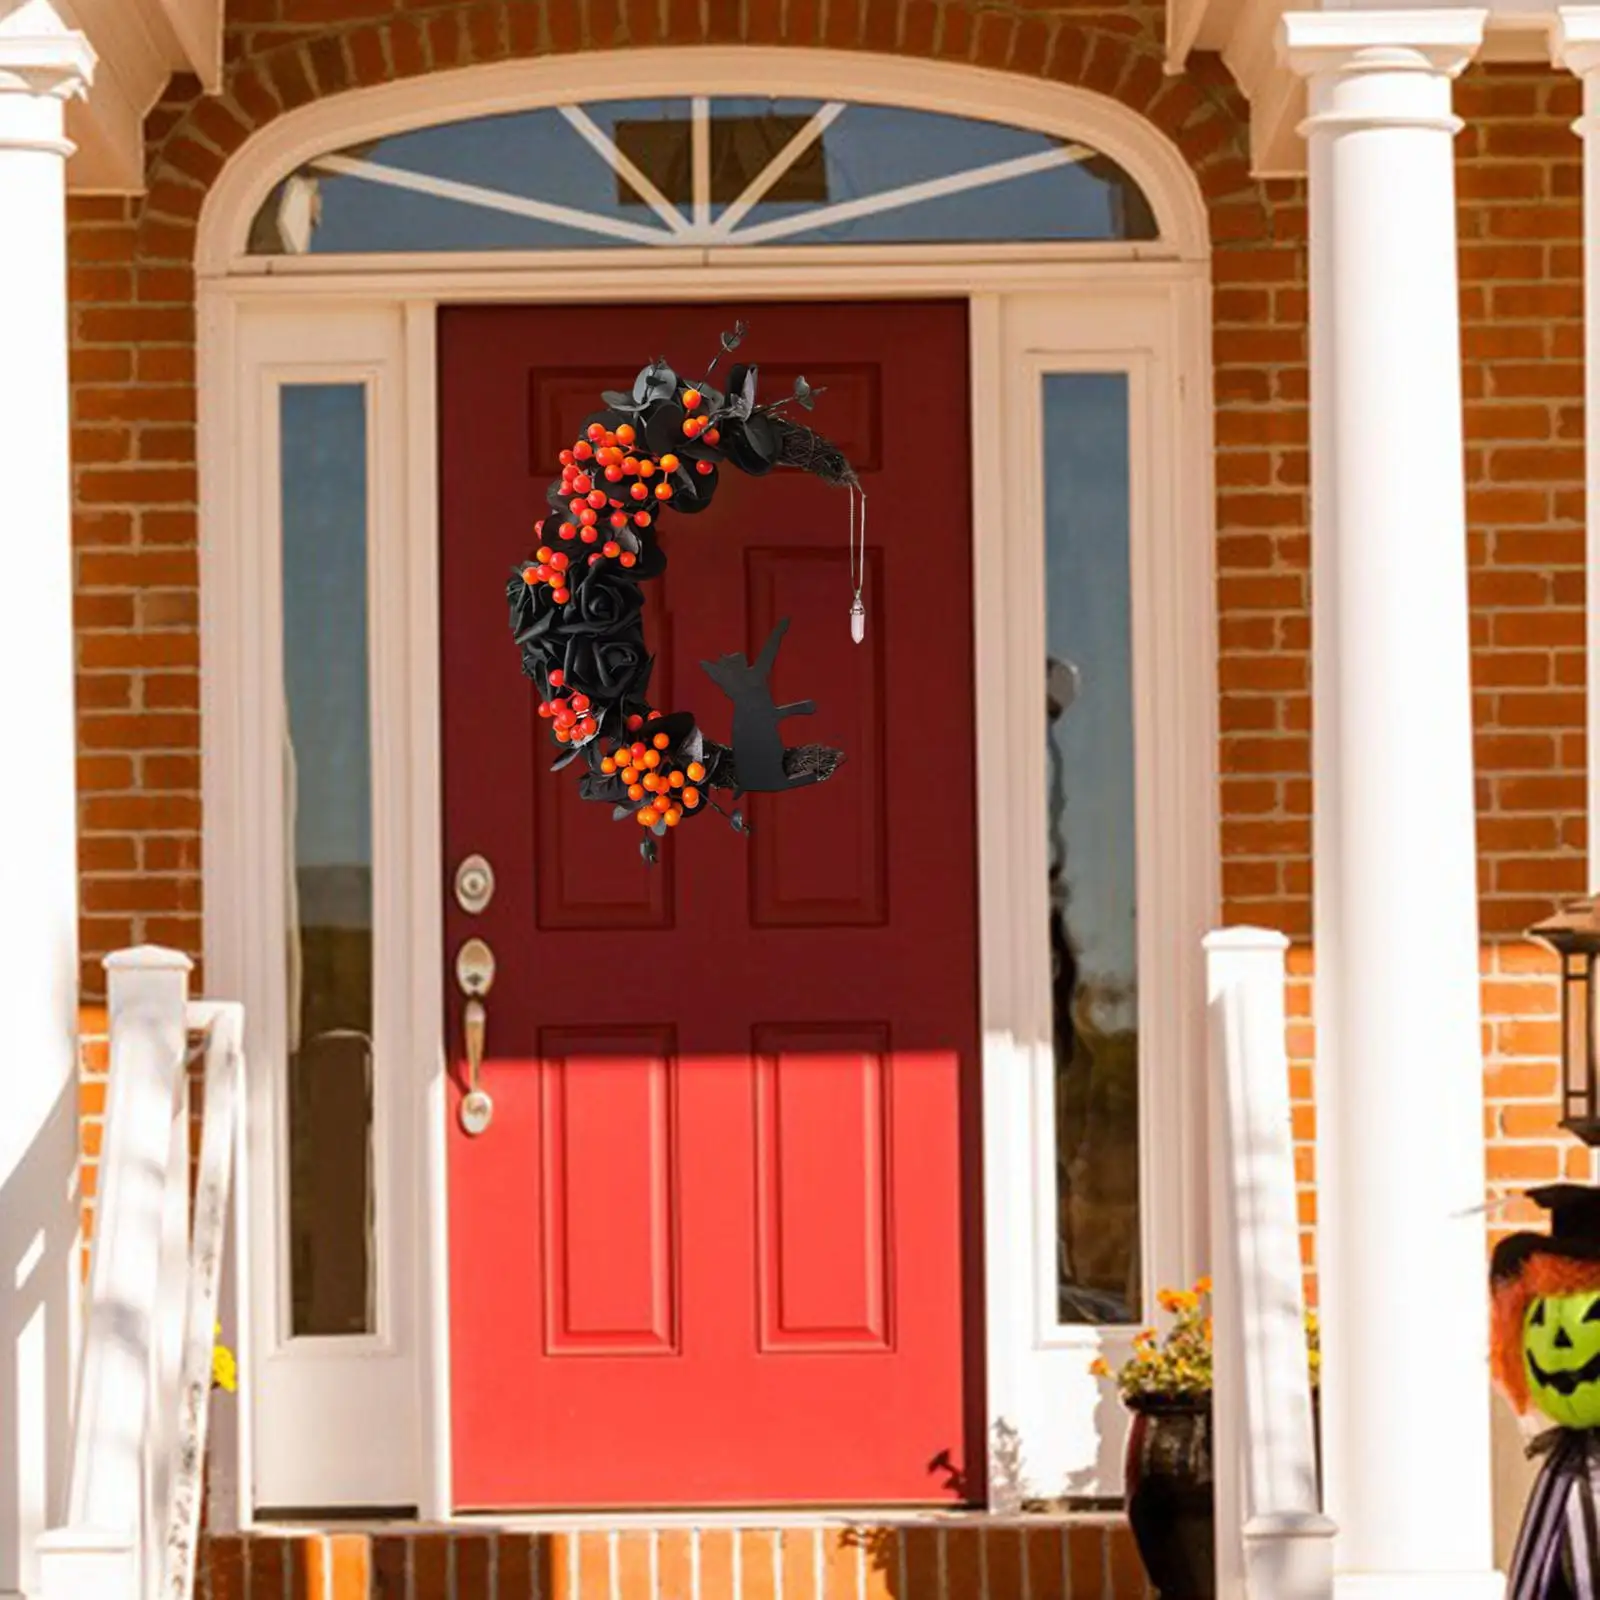 Cat Wreath Hanging Garland Wedding for Door Home Decor Halloween Fall Autumn